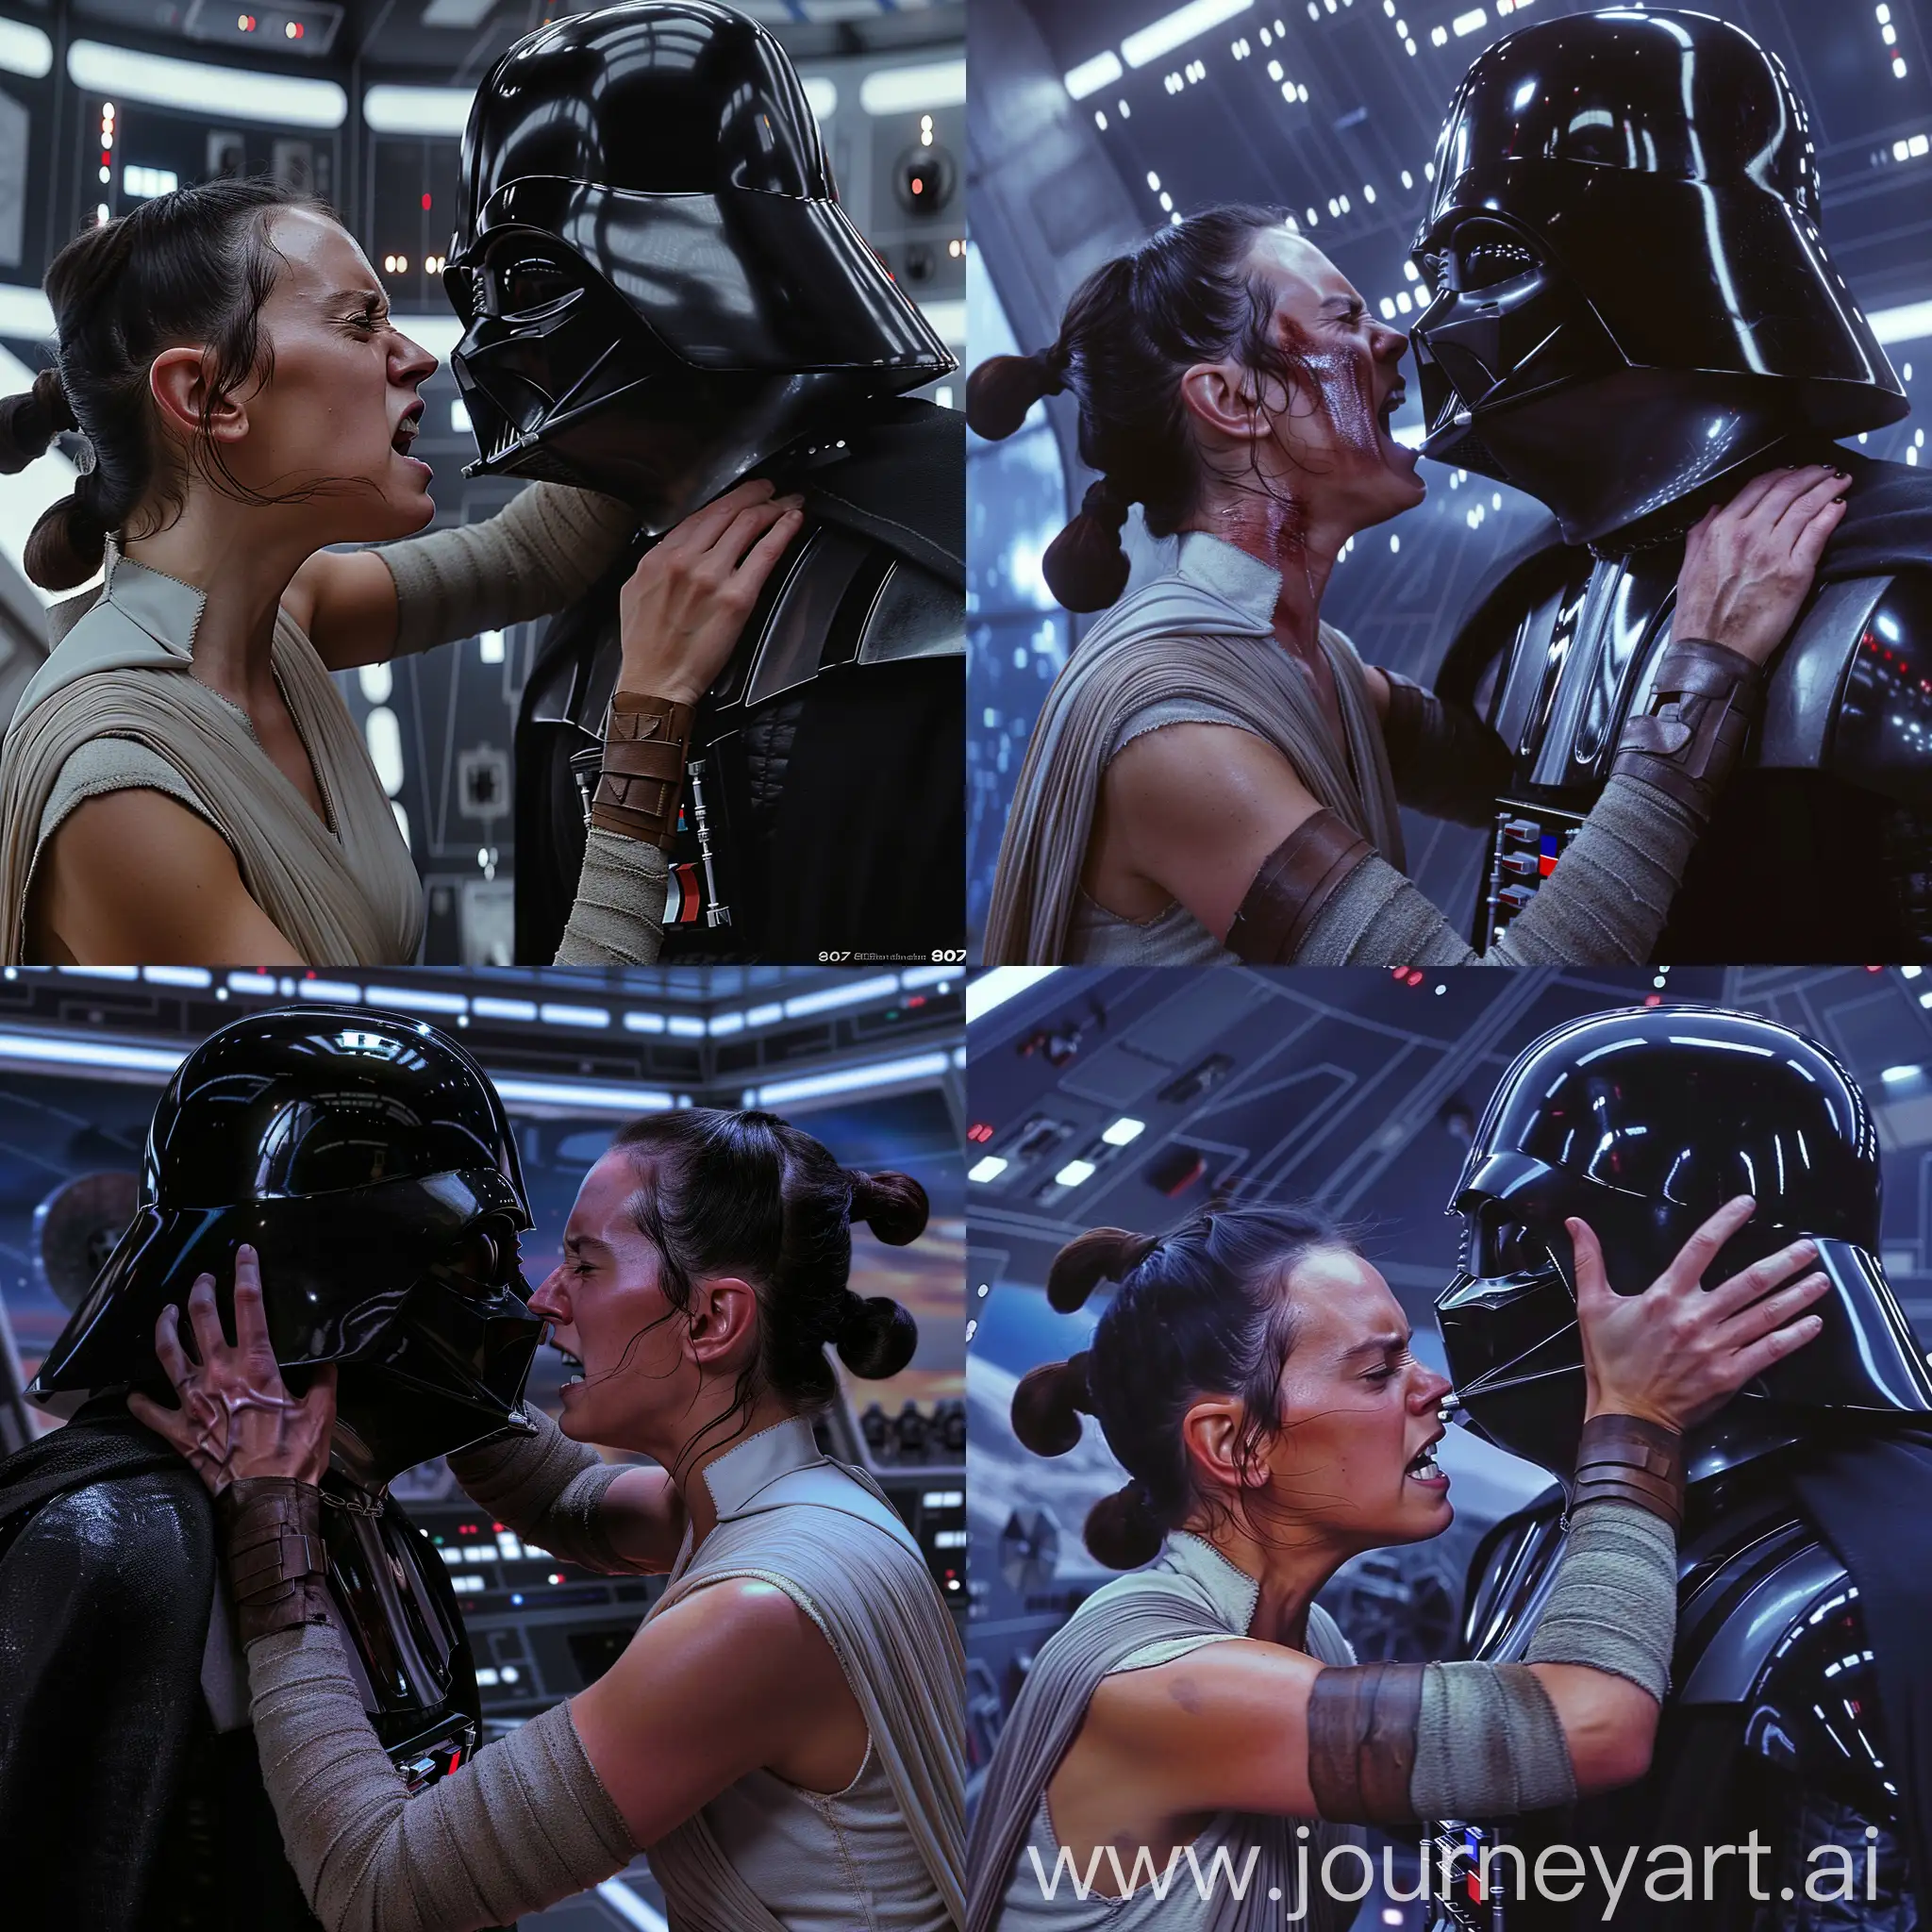 Intense-Confrontation-Rey-Skywalker-Confronts-Darth-Vader-in-HyperRealistic-Star-Wars-Scene